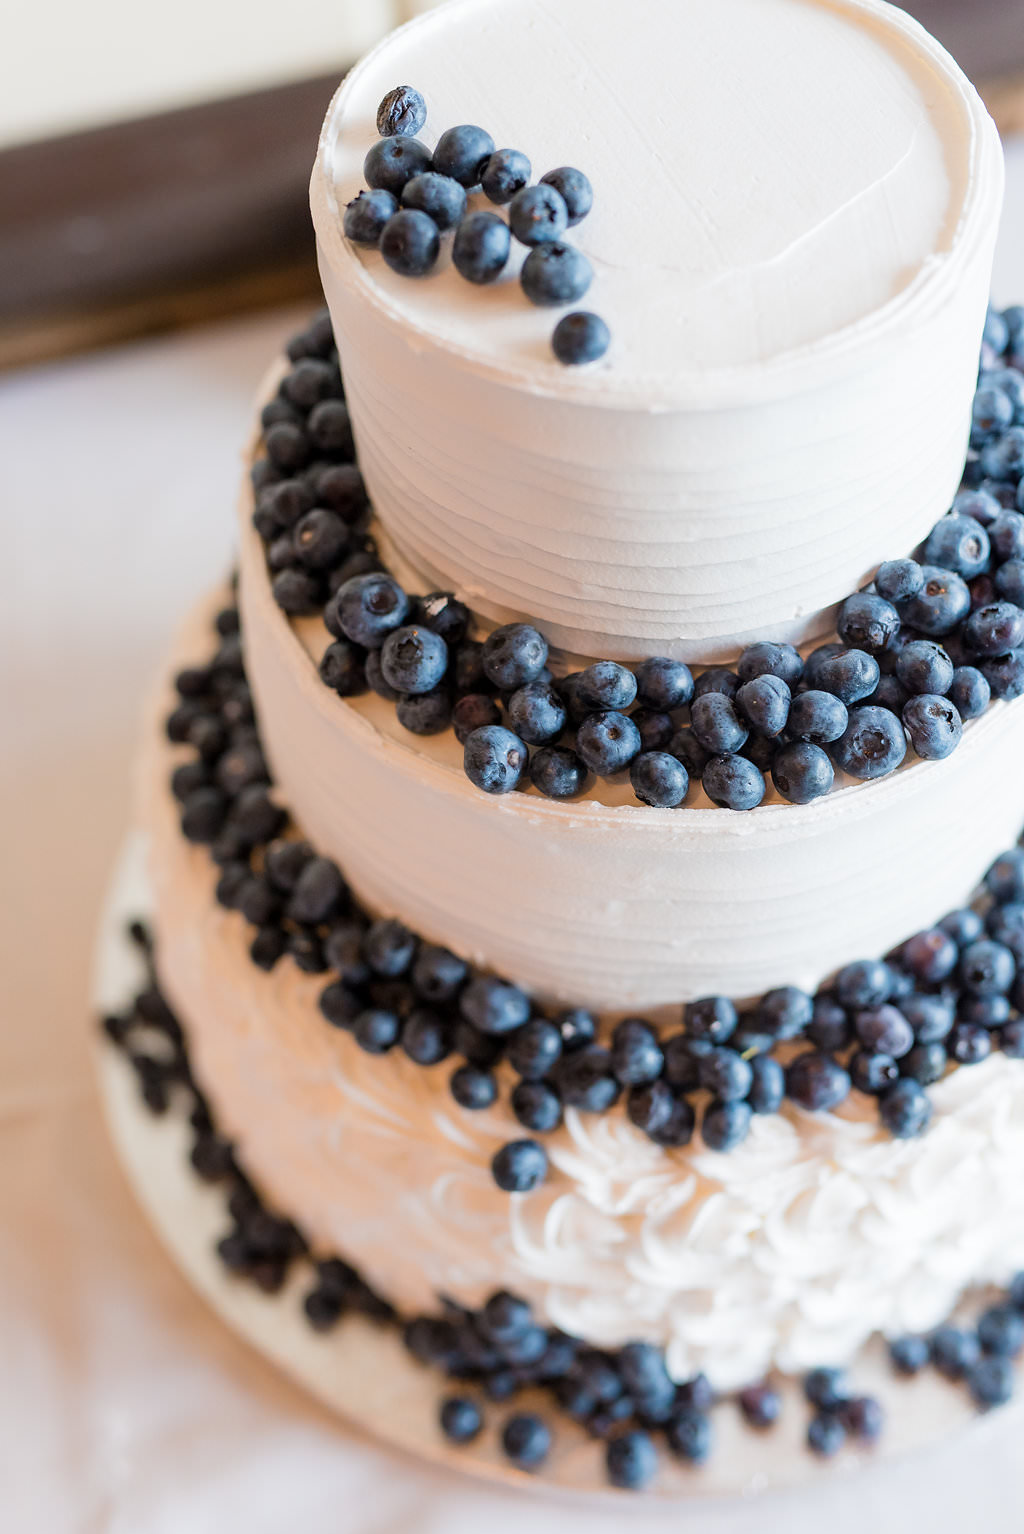 Round White Wedding Cake with Fresh Fruit Blueberries